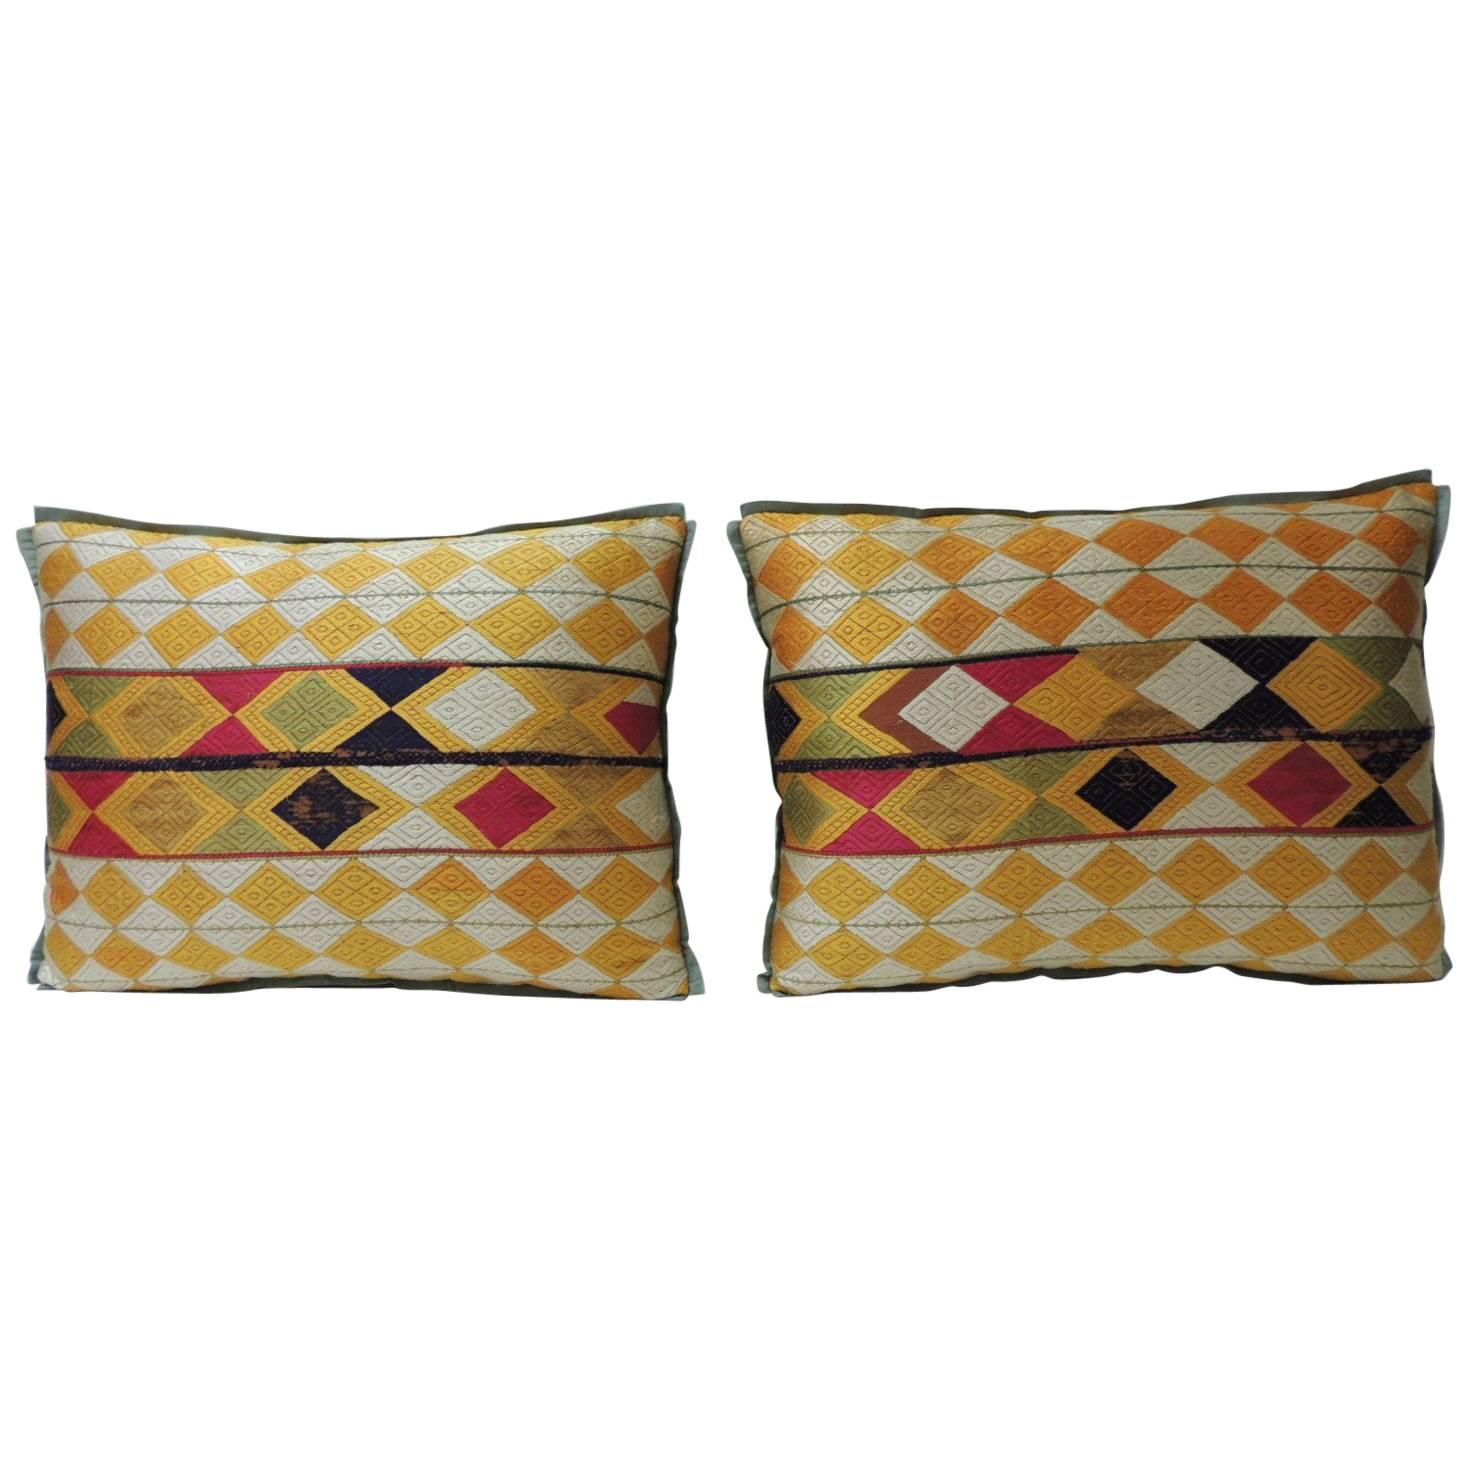 Pair of Indian 19th Century “Phulkari” Artisanal Decorative Bolster Pillow